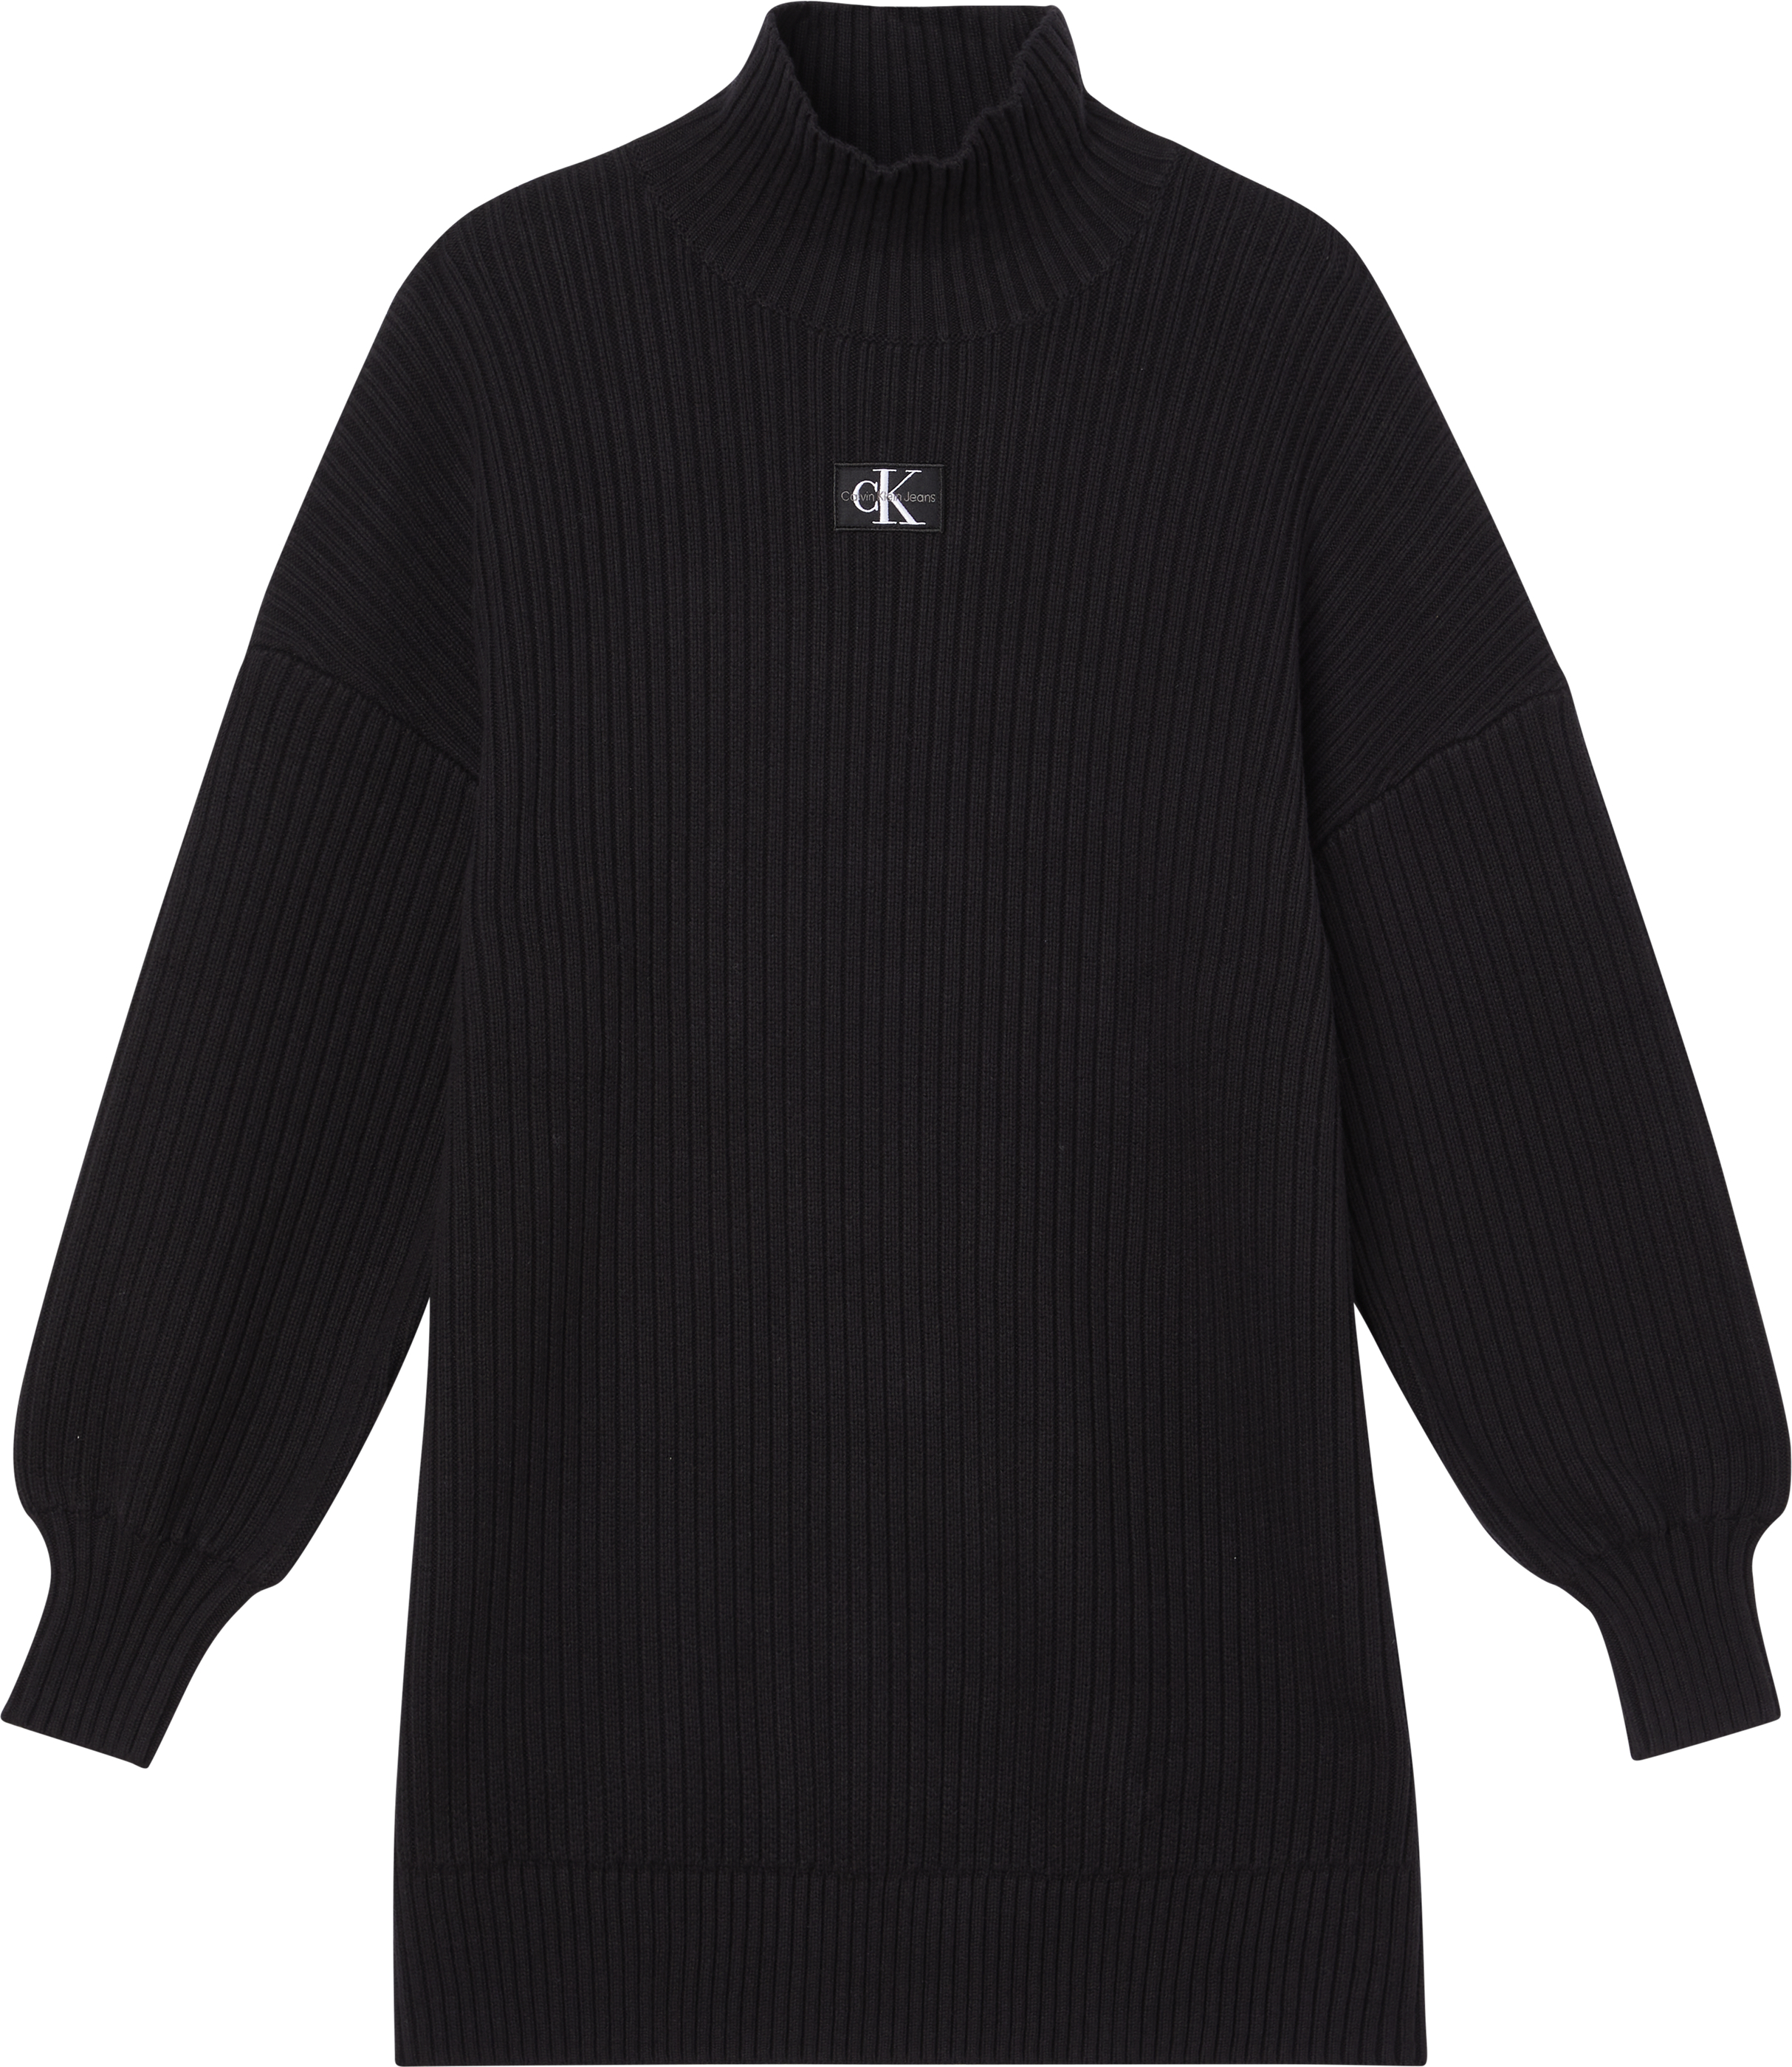 Calvin Klein - Sweater Dress Ck Black